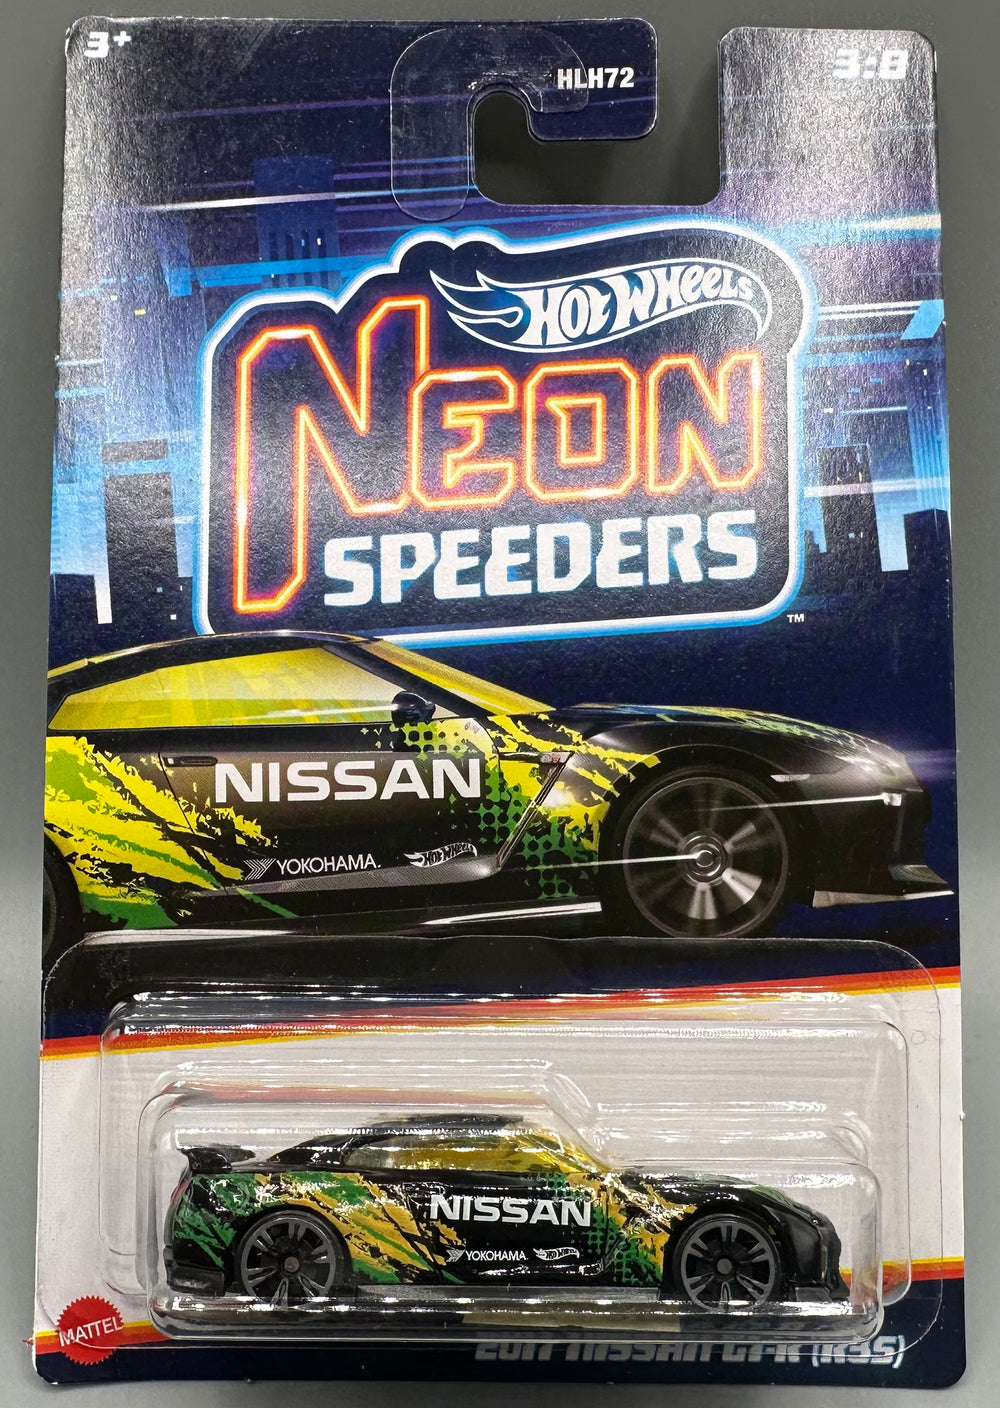 Hot Wheels Neon Speeders 2017 Nissan GT-R (R35)